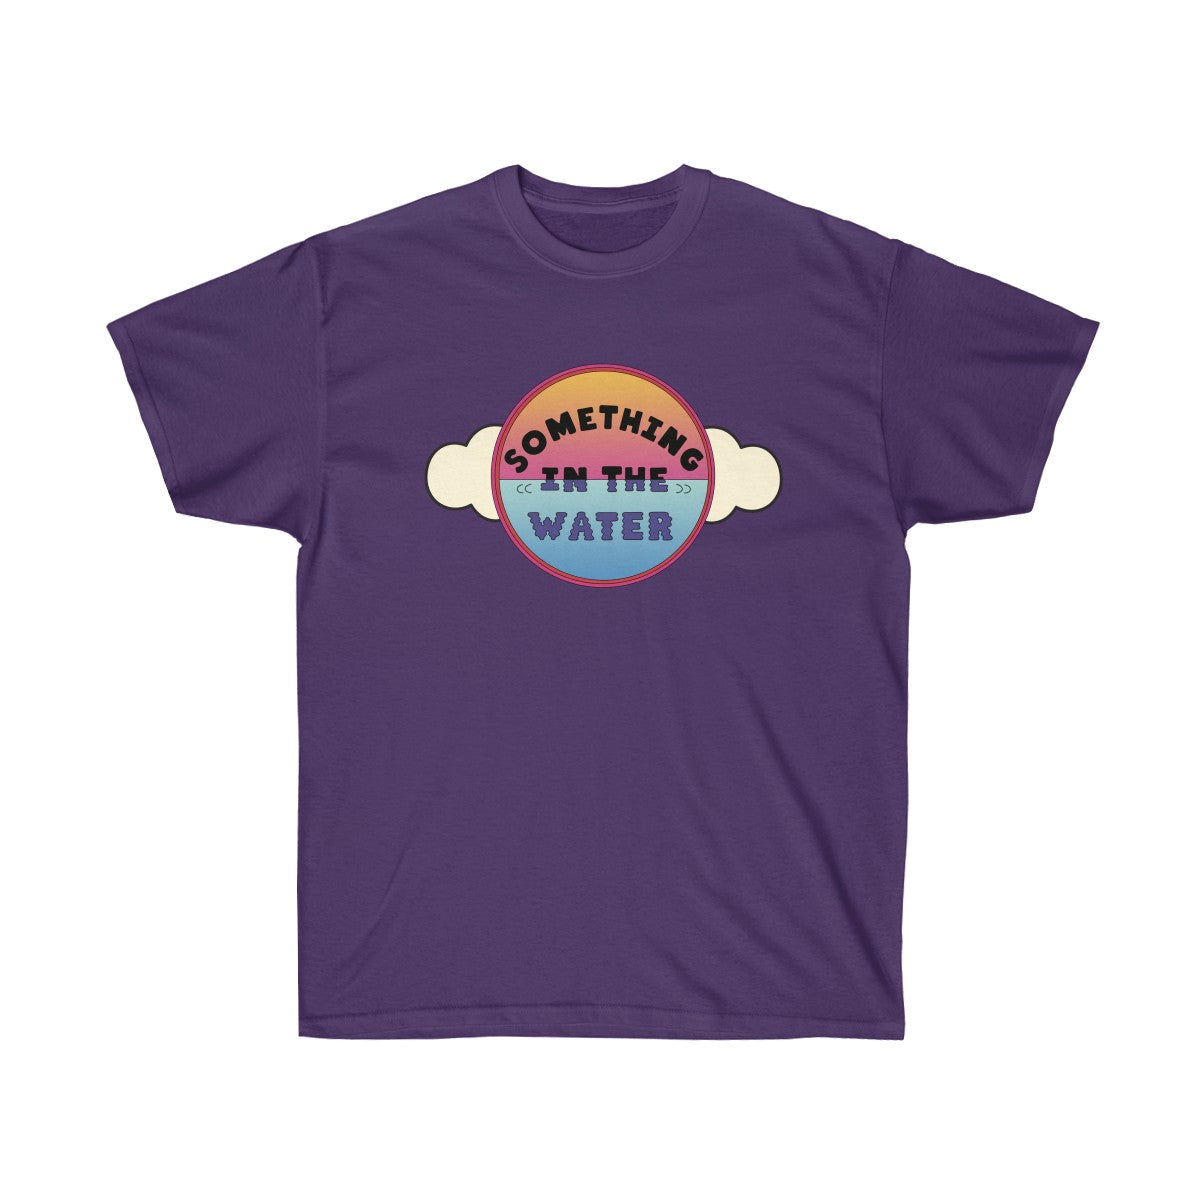 Something in the water Unisex Ultra Cotton Tee - Pharrell Williams festival inspired-Purple-S-Archethype